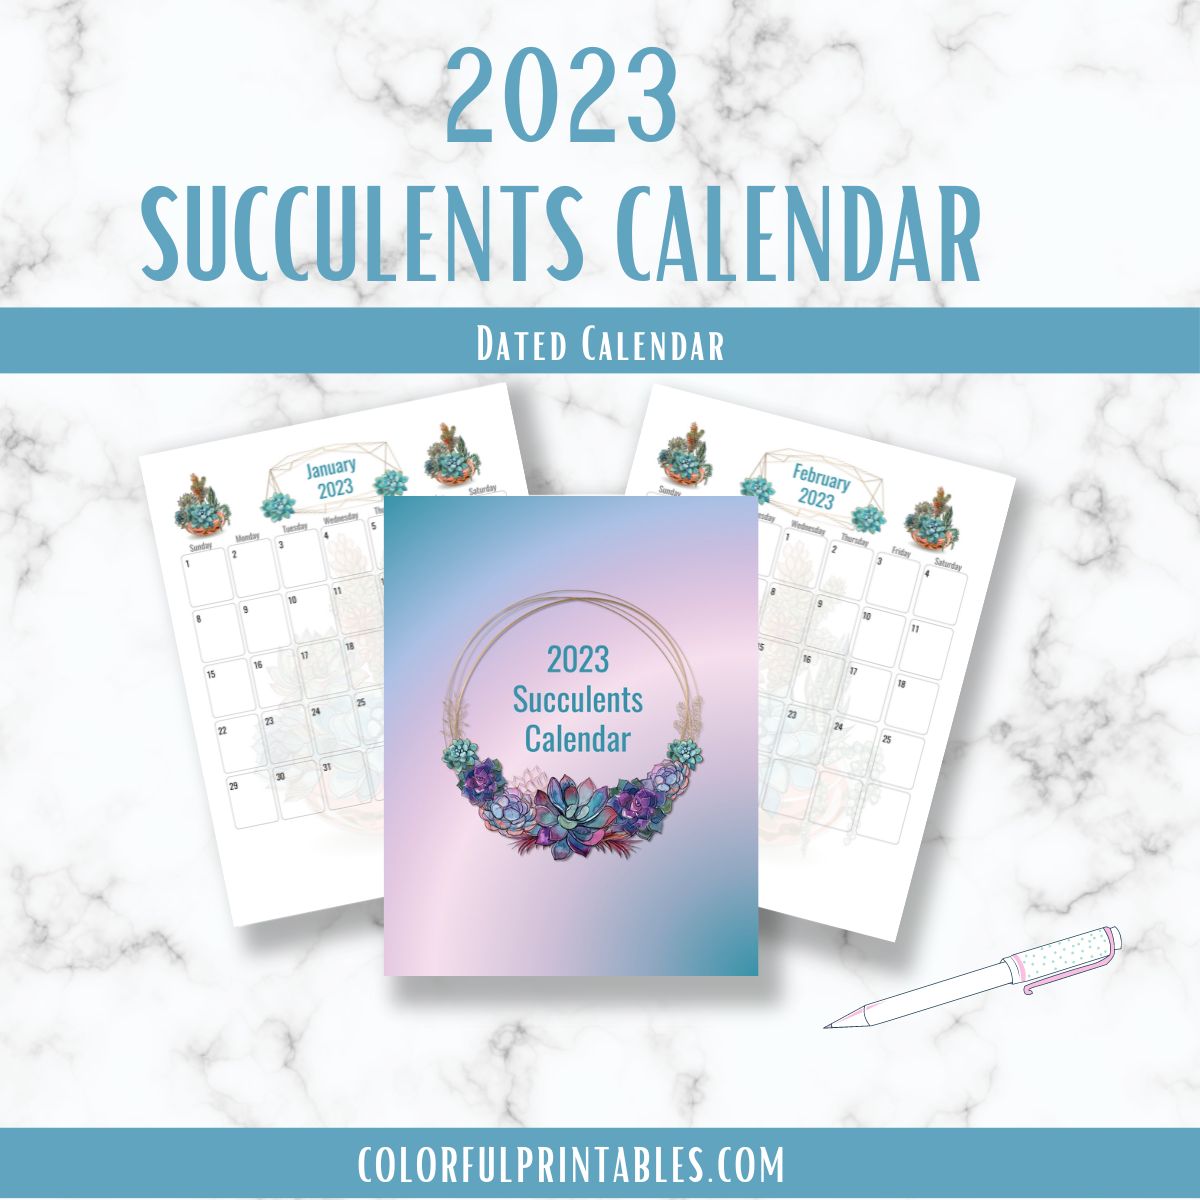 Succulents Calendar Colorful Printables